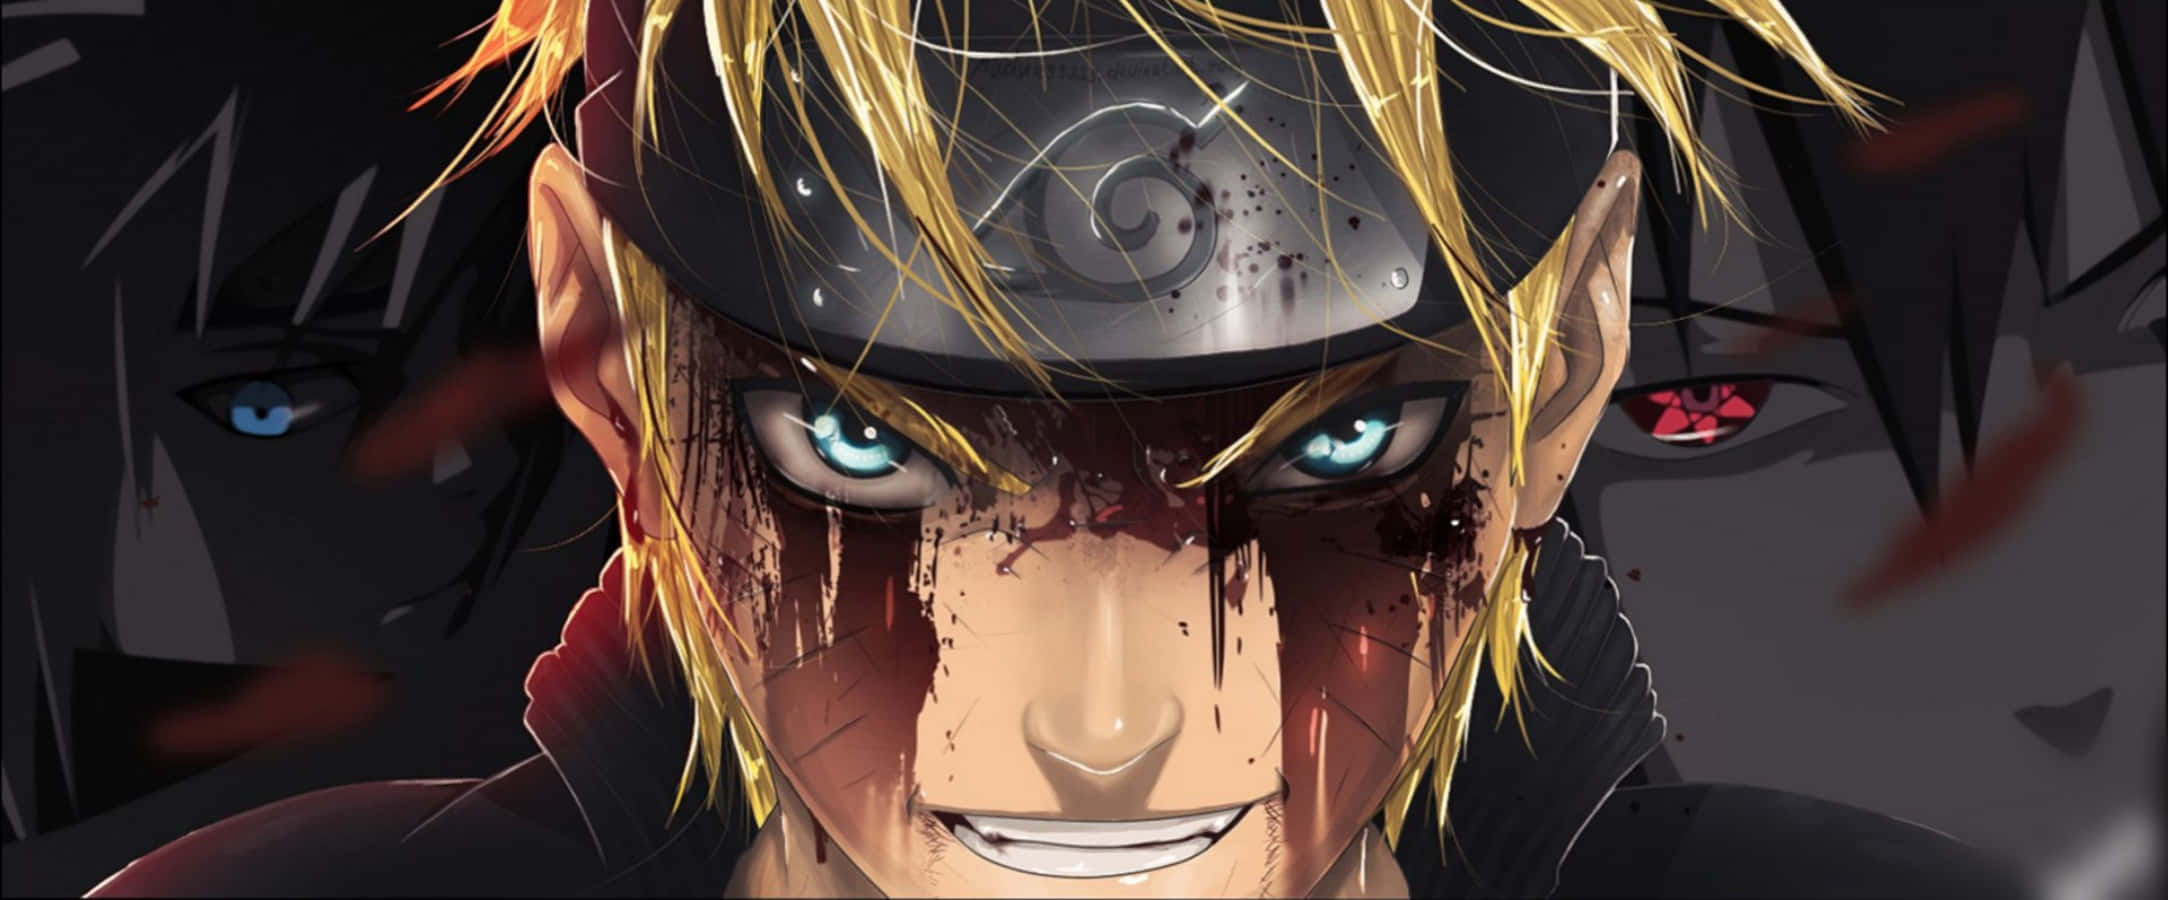 Be The Ultimate Ninja with Playstation 4's Naruto Games Wallpaper